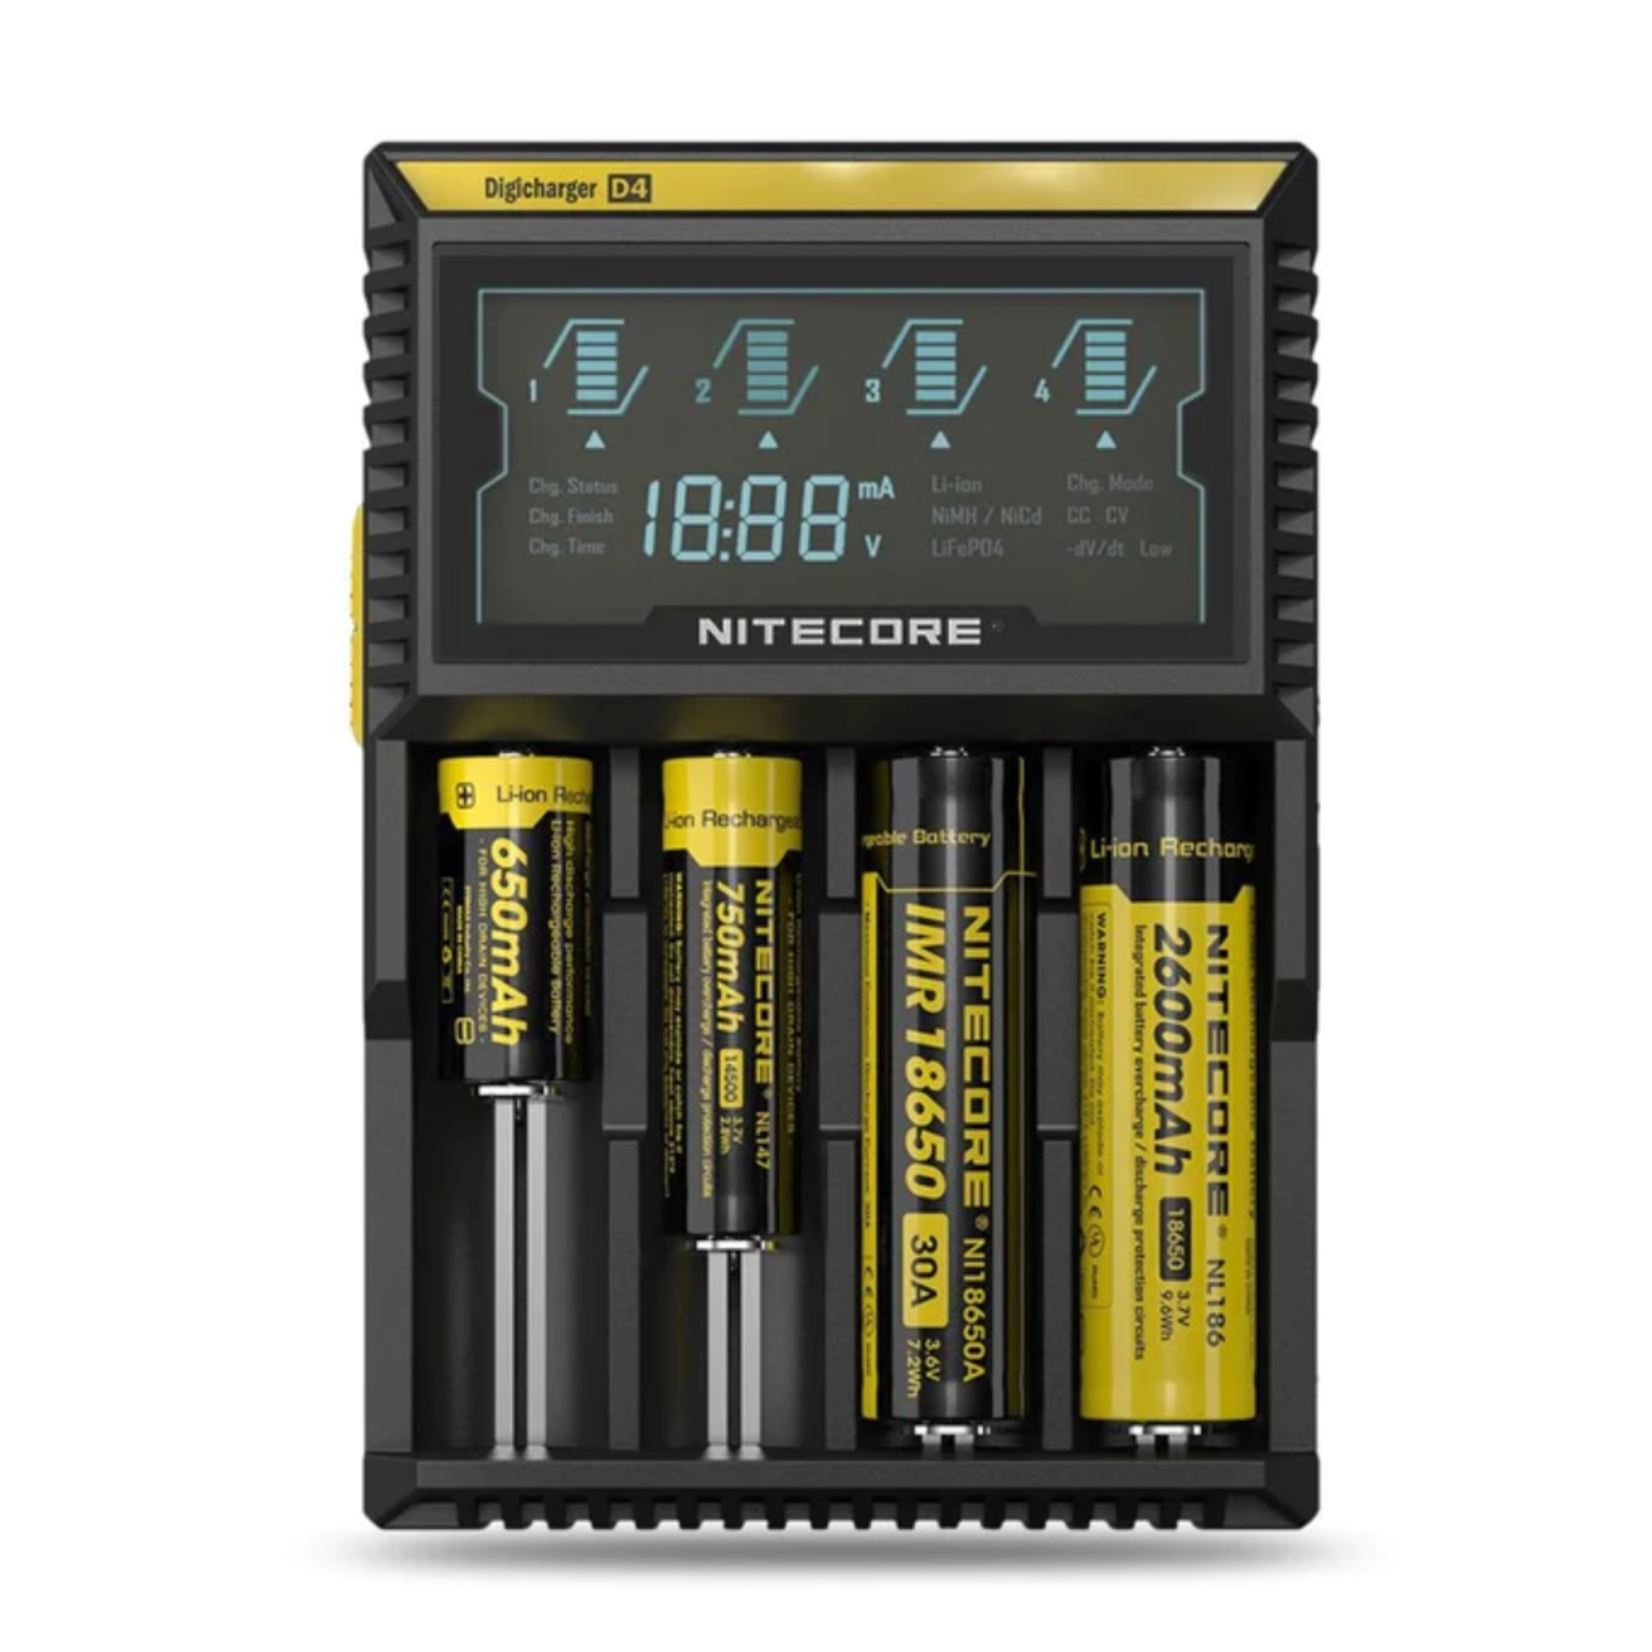 Nitecore Nitecore D4 Digital Reader (Quad) Battery Charger